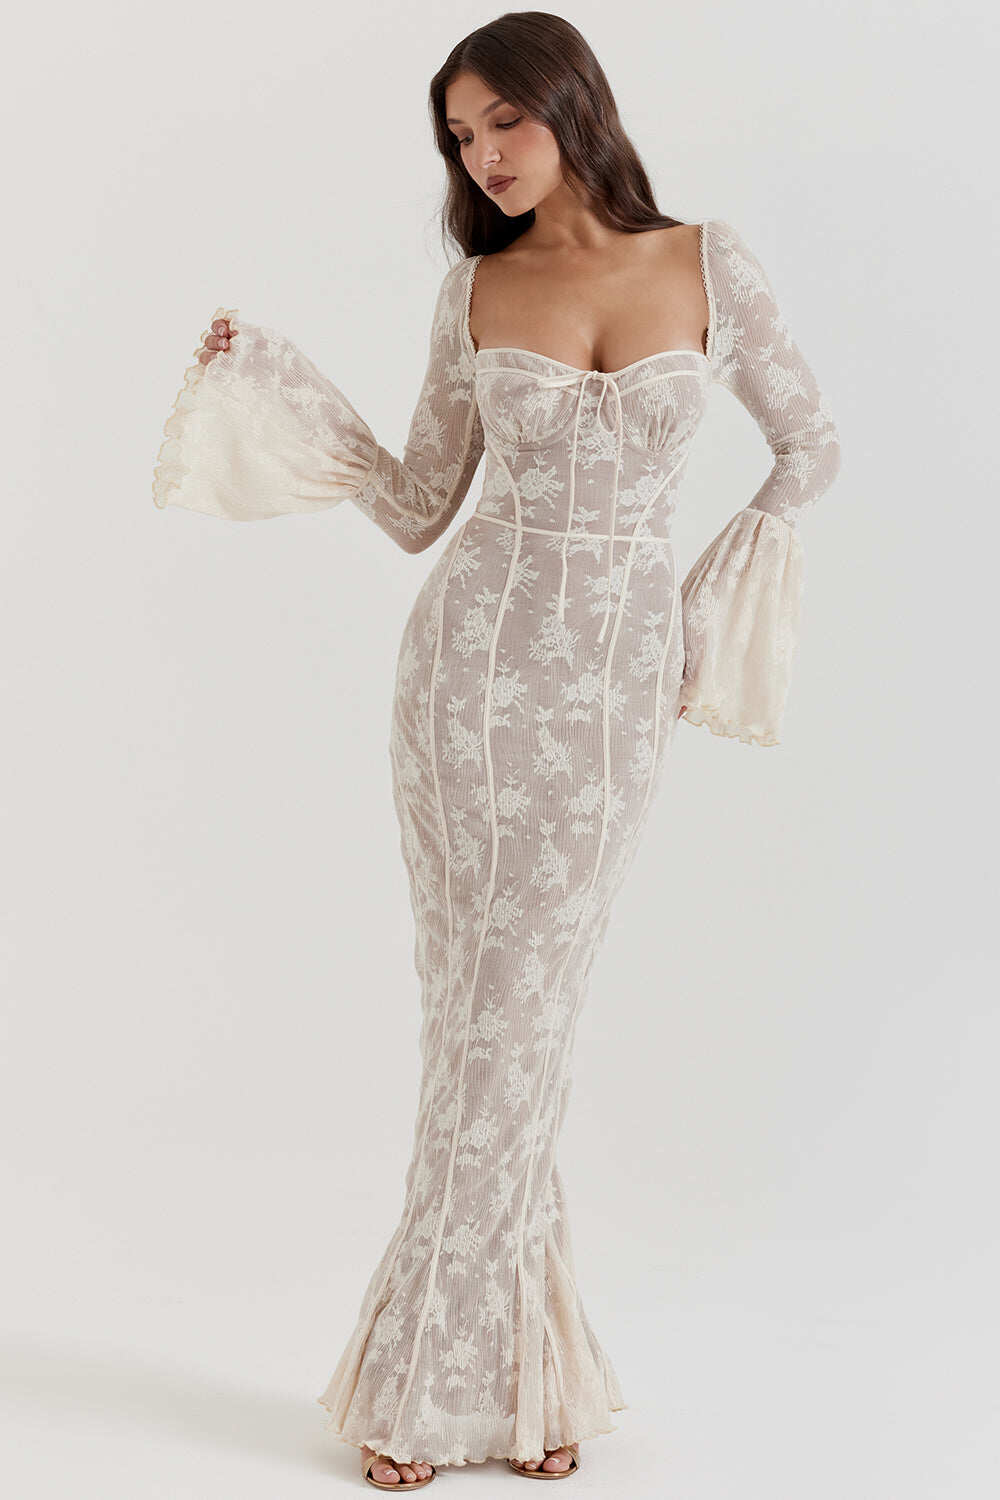 Kremowa koronkowa gorsetowa sukienka w stylu vintage